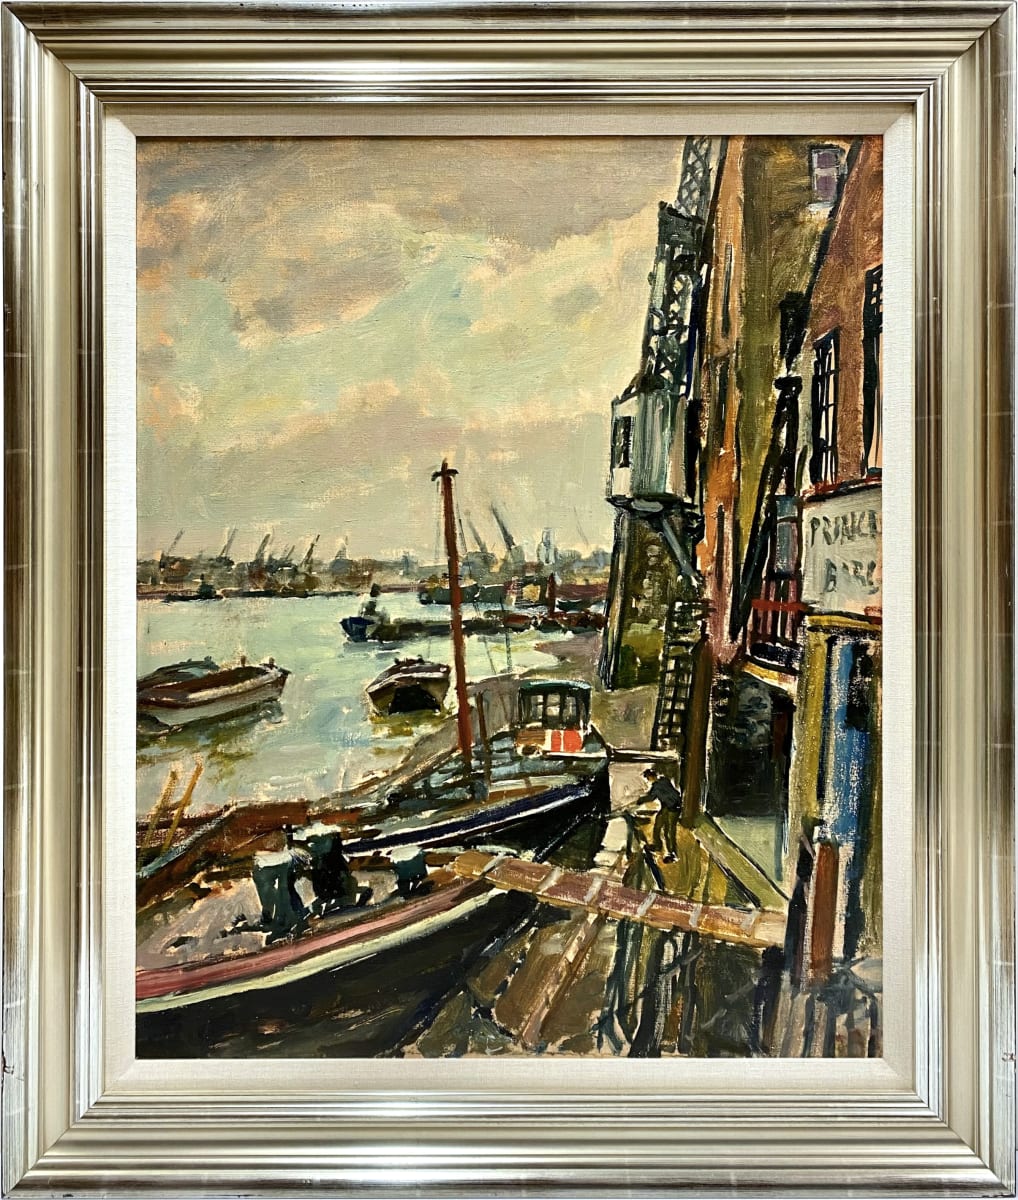 0261 - Untitled, Shipyard by Llewellyn Petley-Jones (1908-1986) 